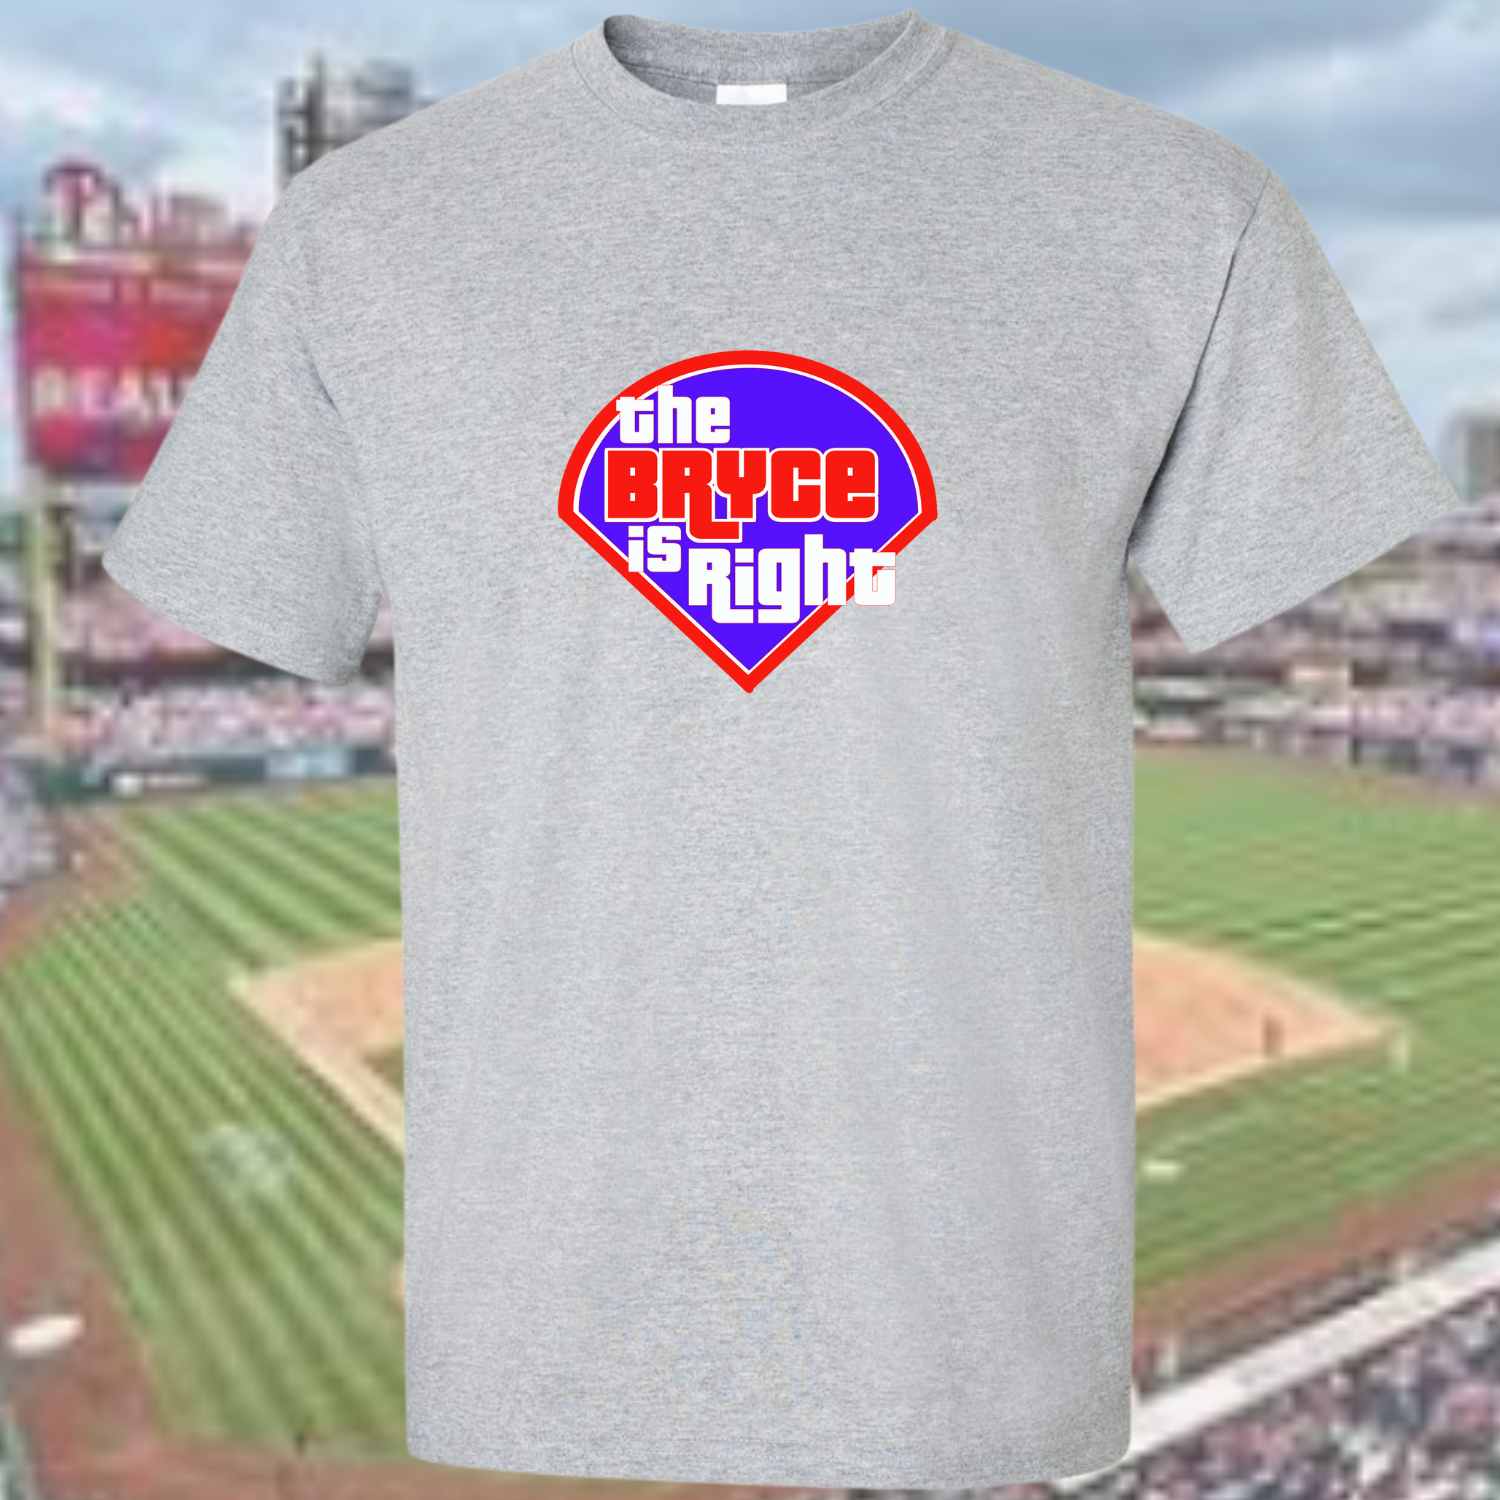 Bryce Harper Phillies Unisex T-shirt - Shibtee Clothing